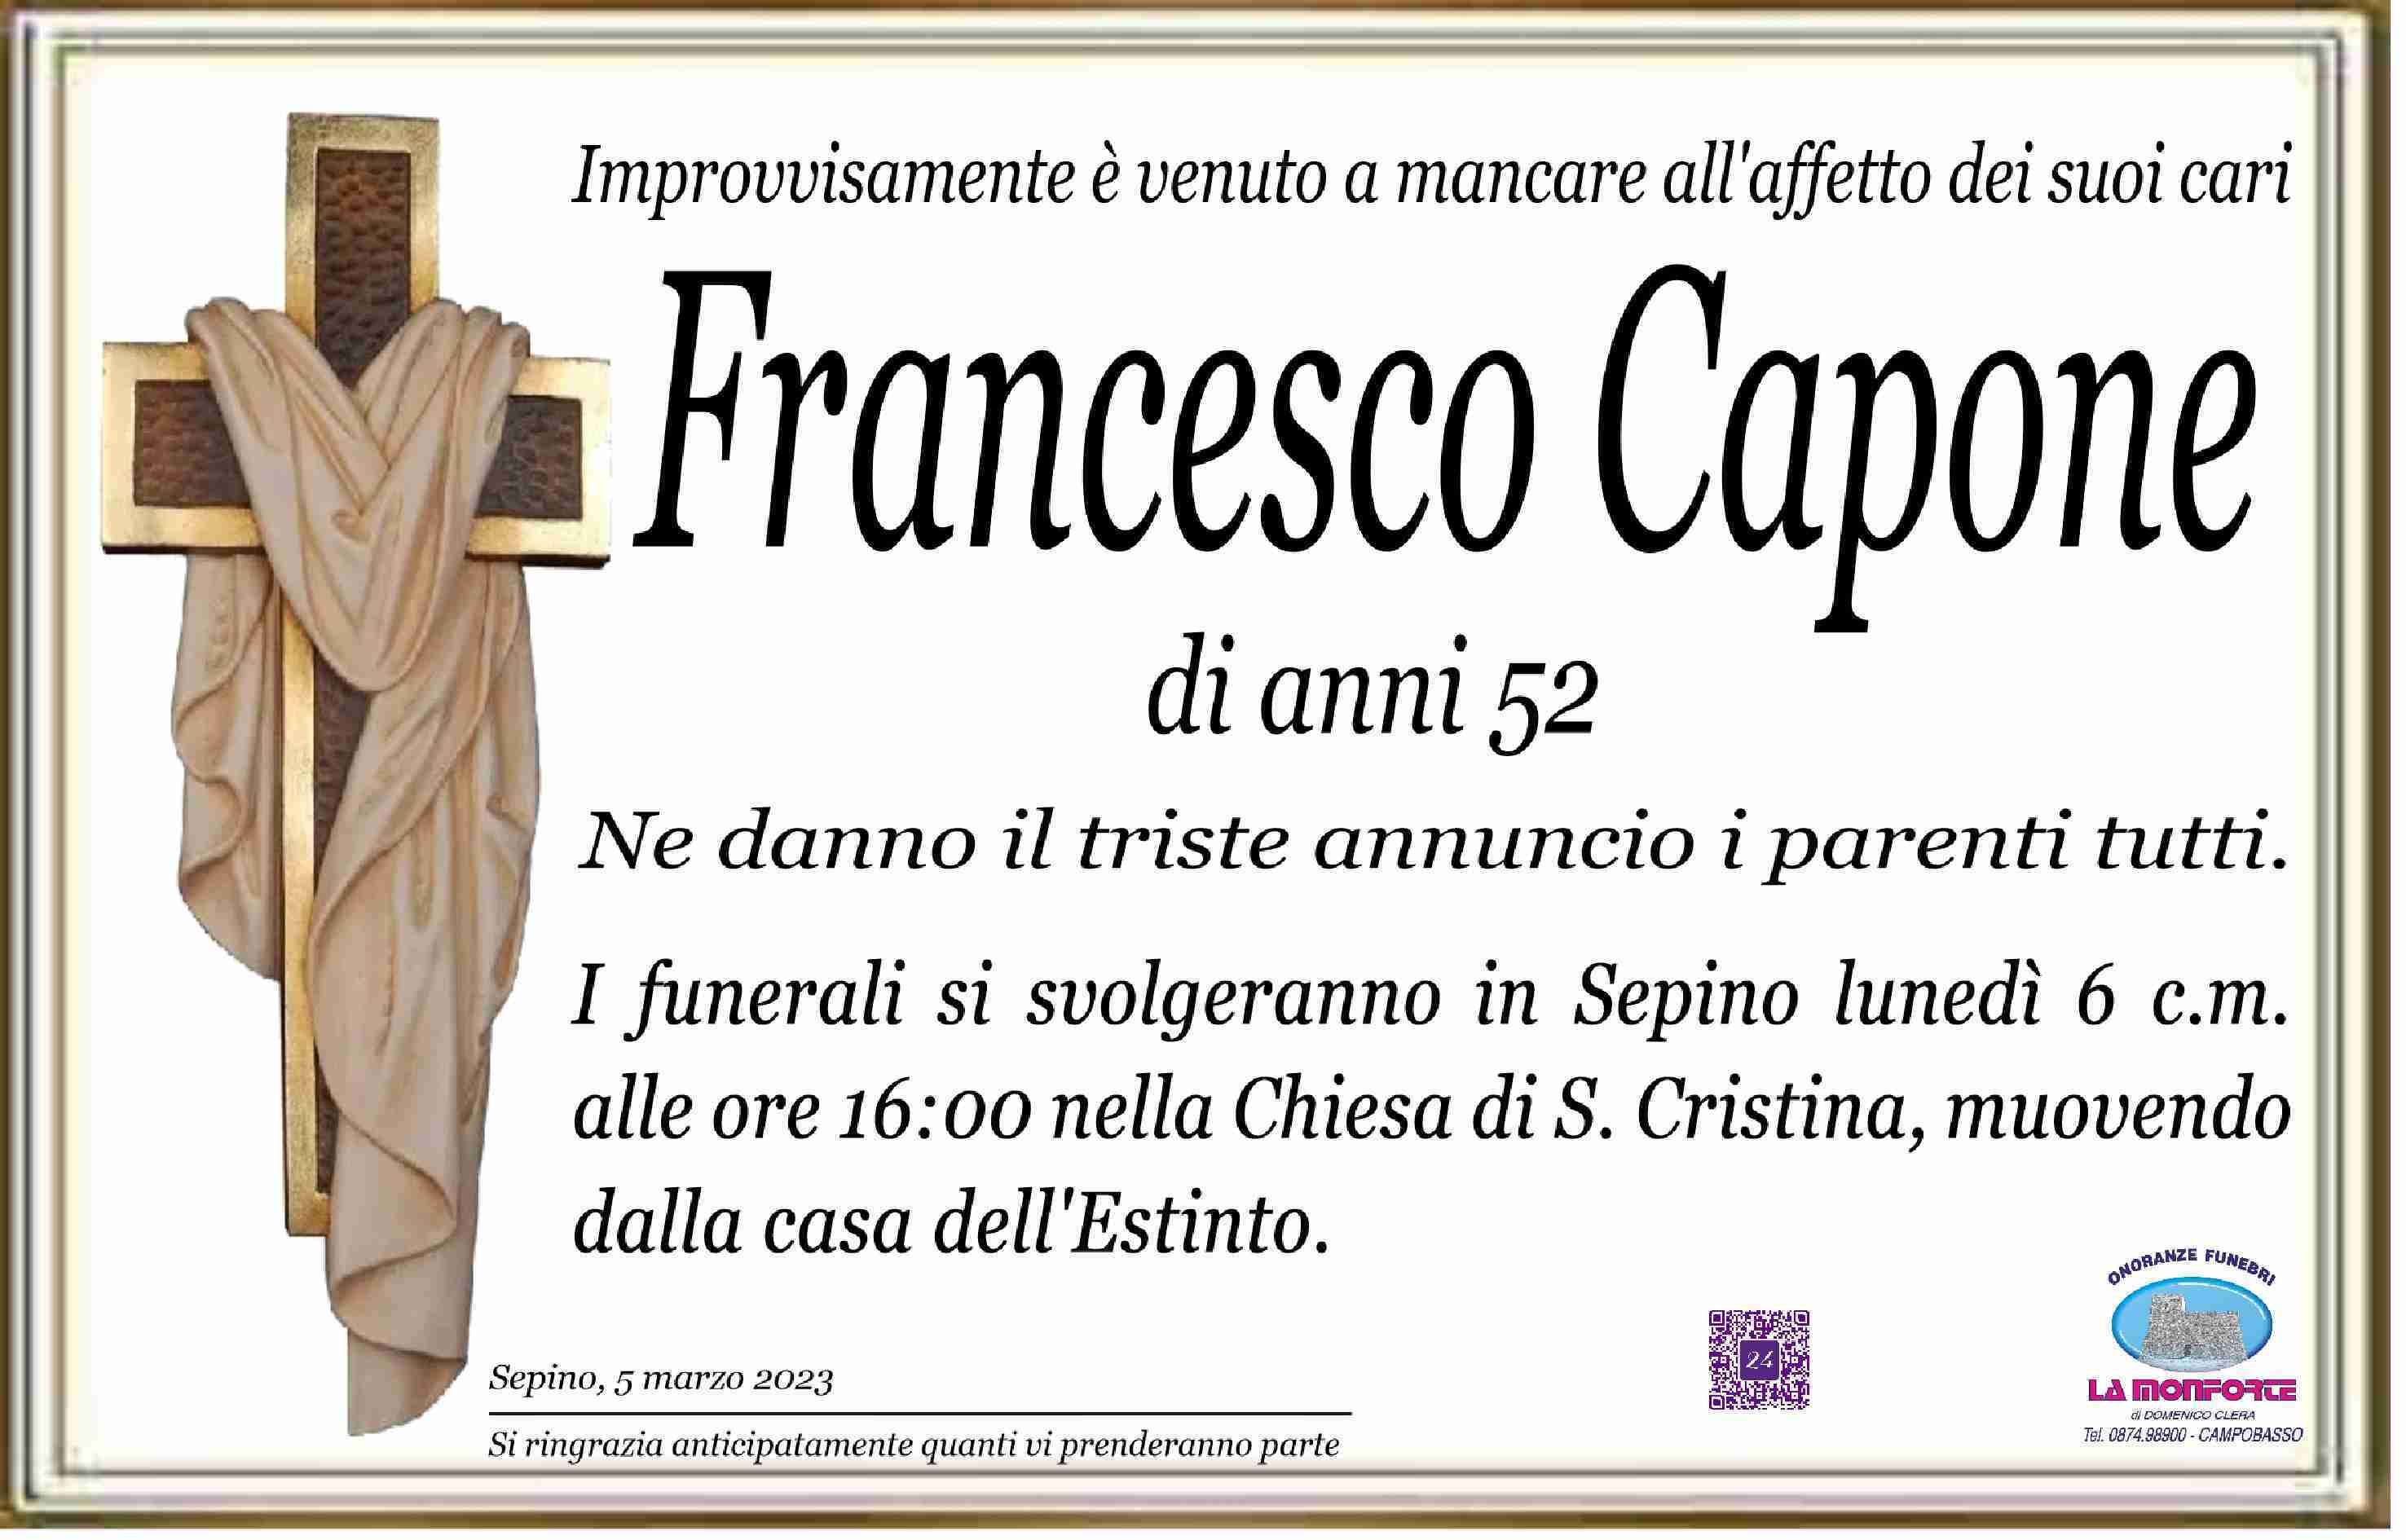 Francesco Capone